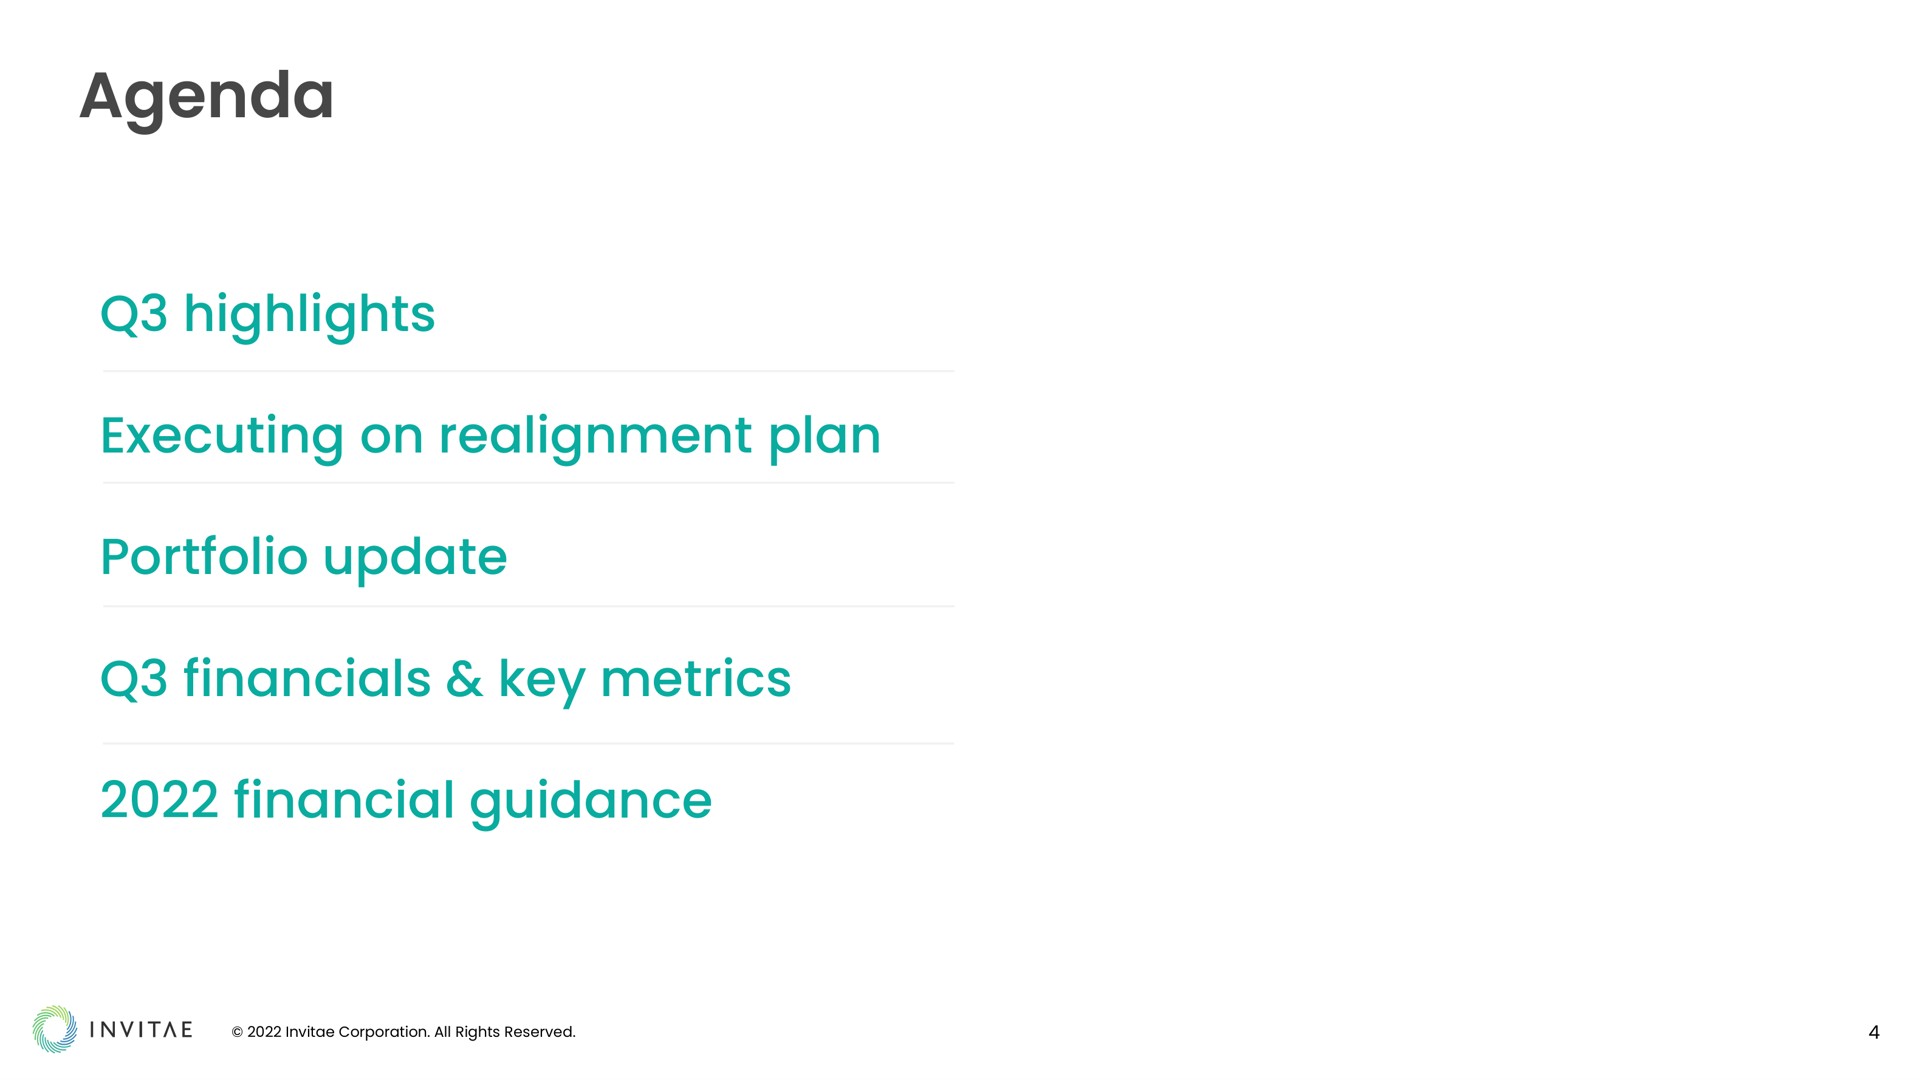 agenda highlights executing on realignment plan portfolio update key metrics financial guidance | Invitae